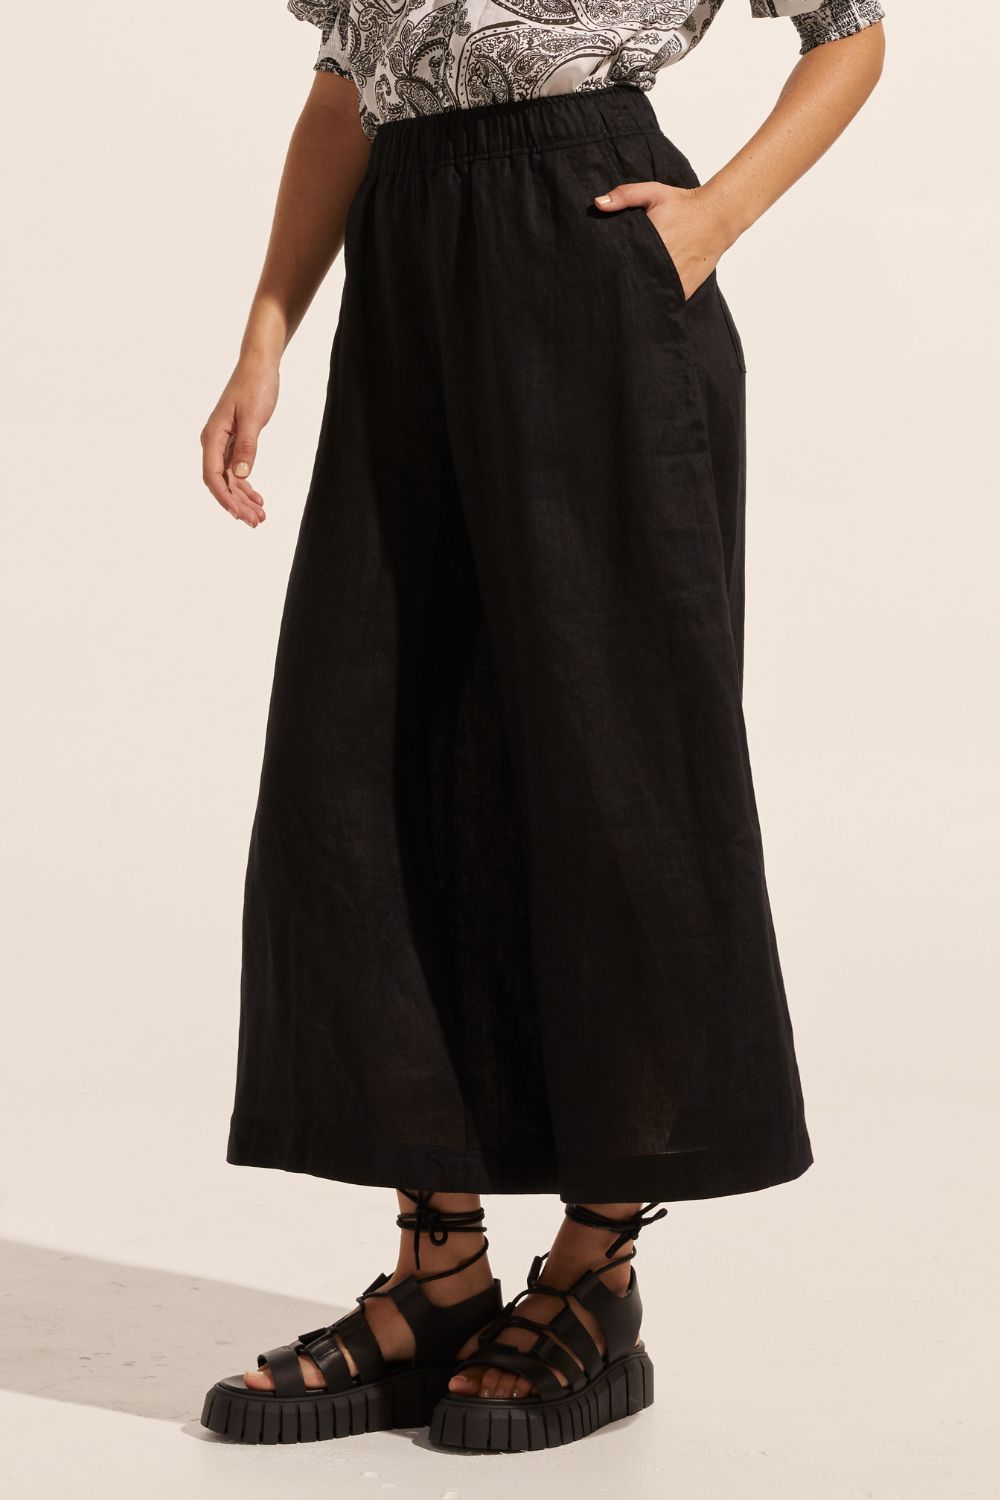 black, pants, elasticated waist, side pockets, wide leg, side image